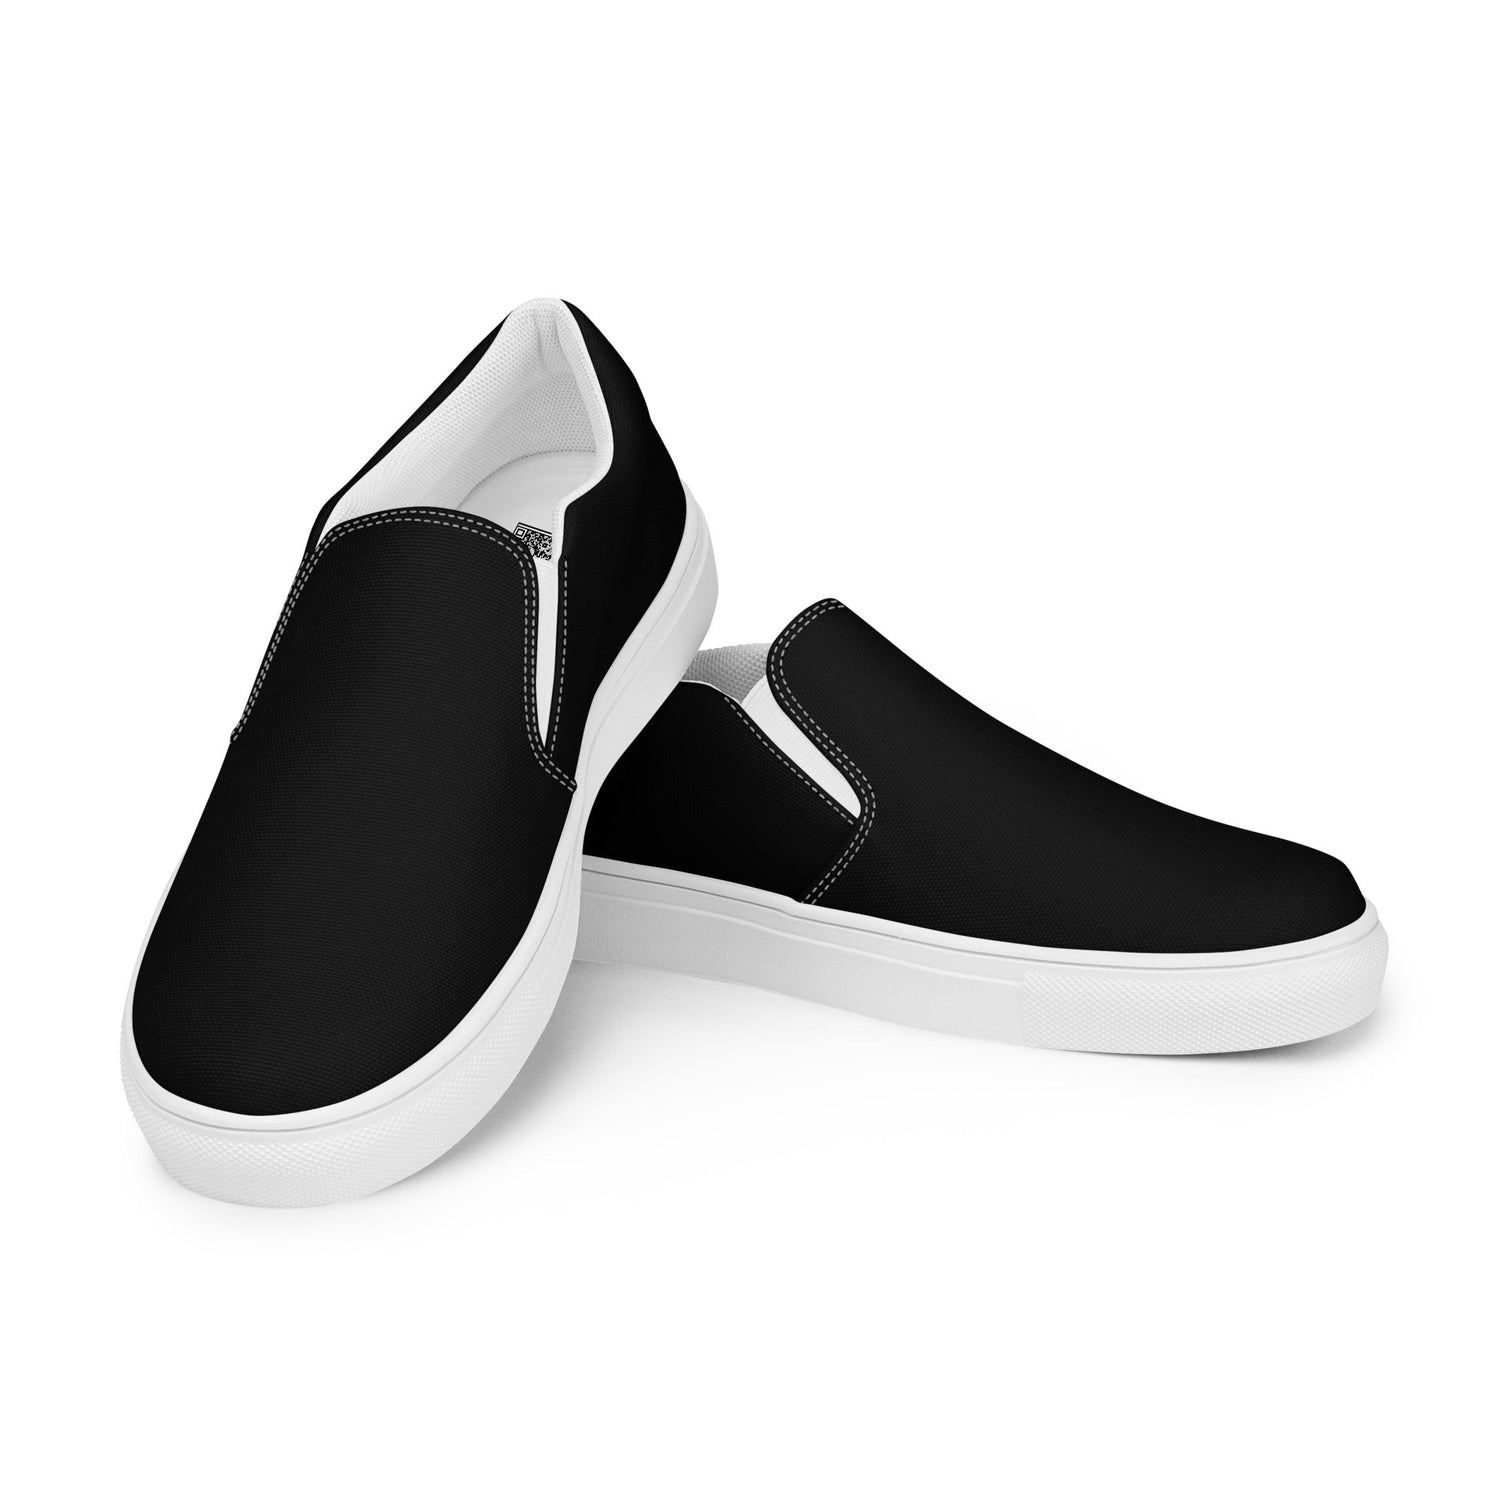 klasneakers Men’s slip-on canvas shoes - Jet Black